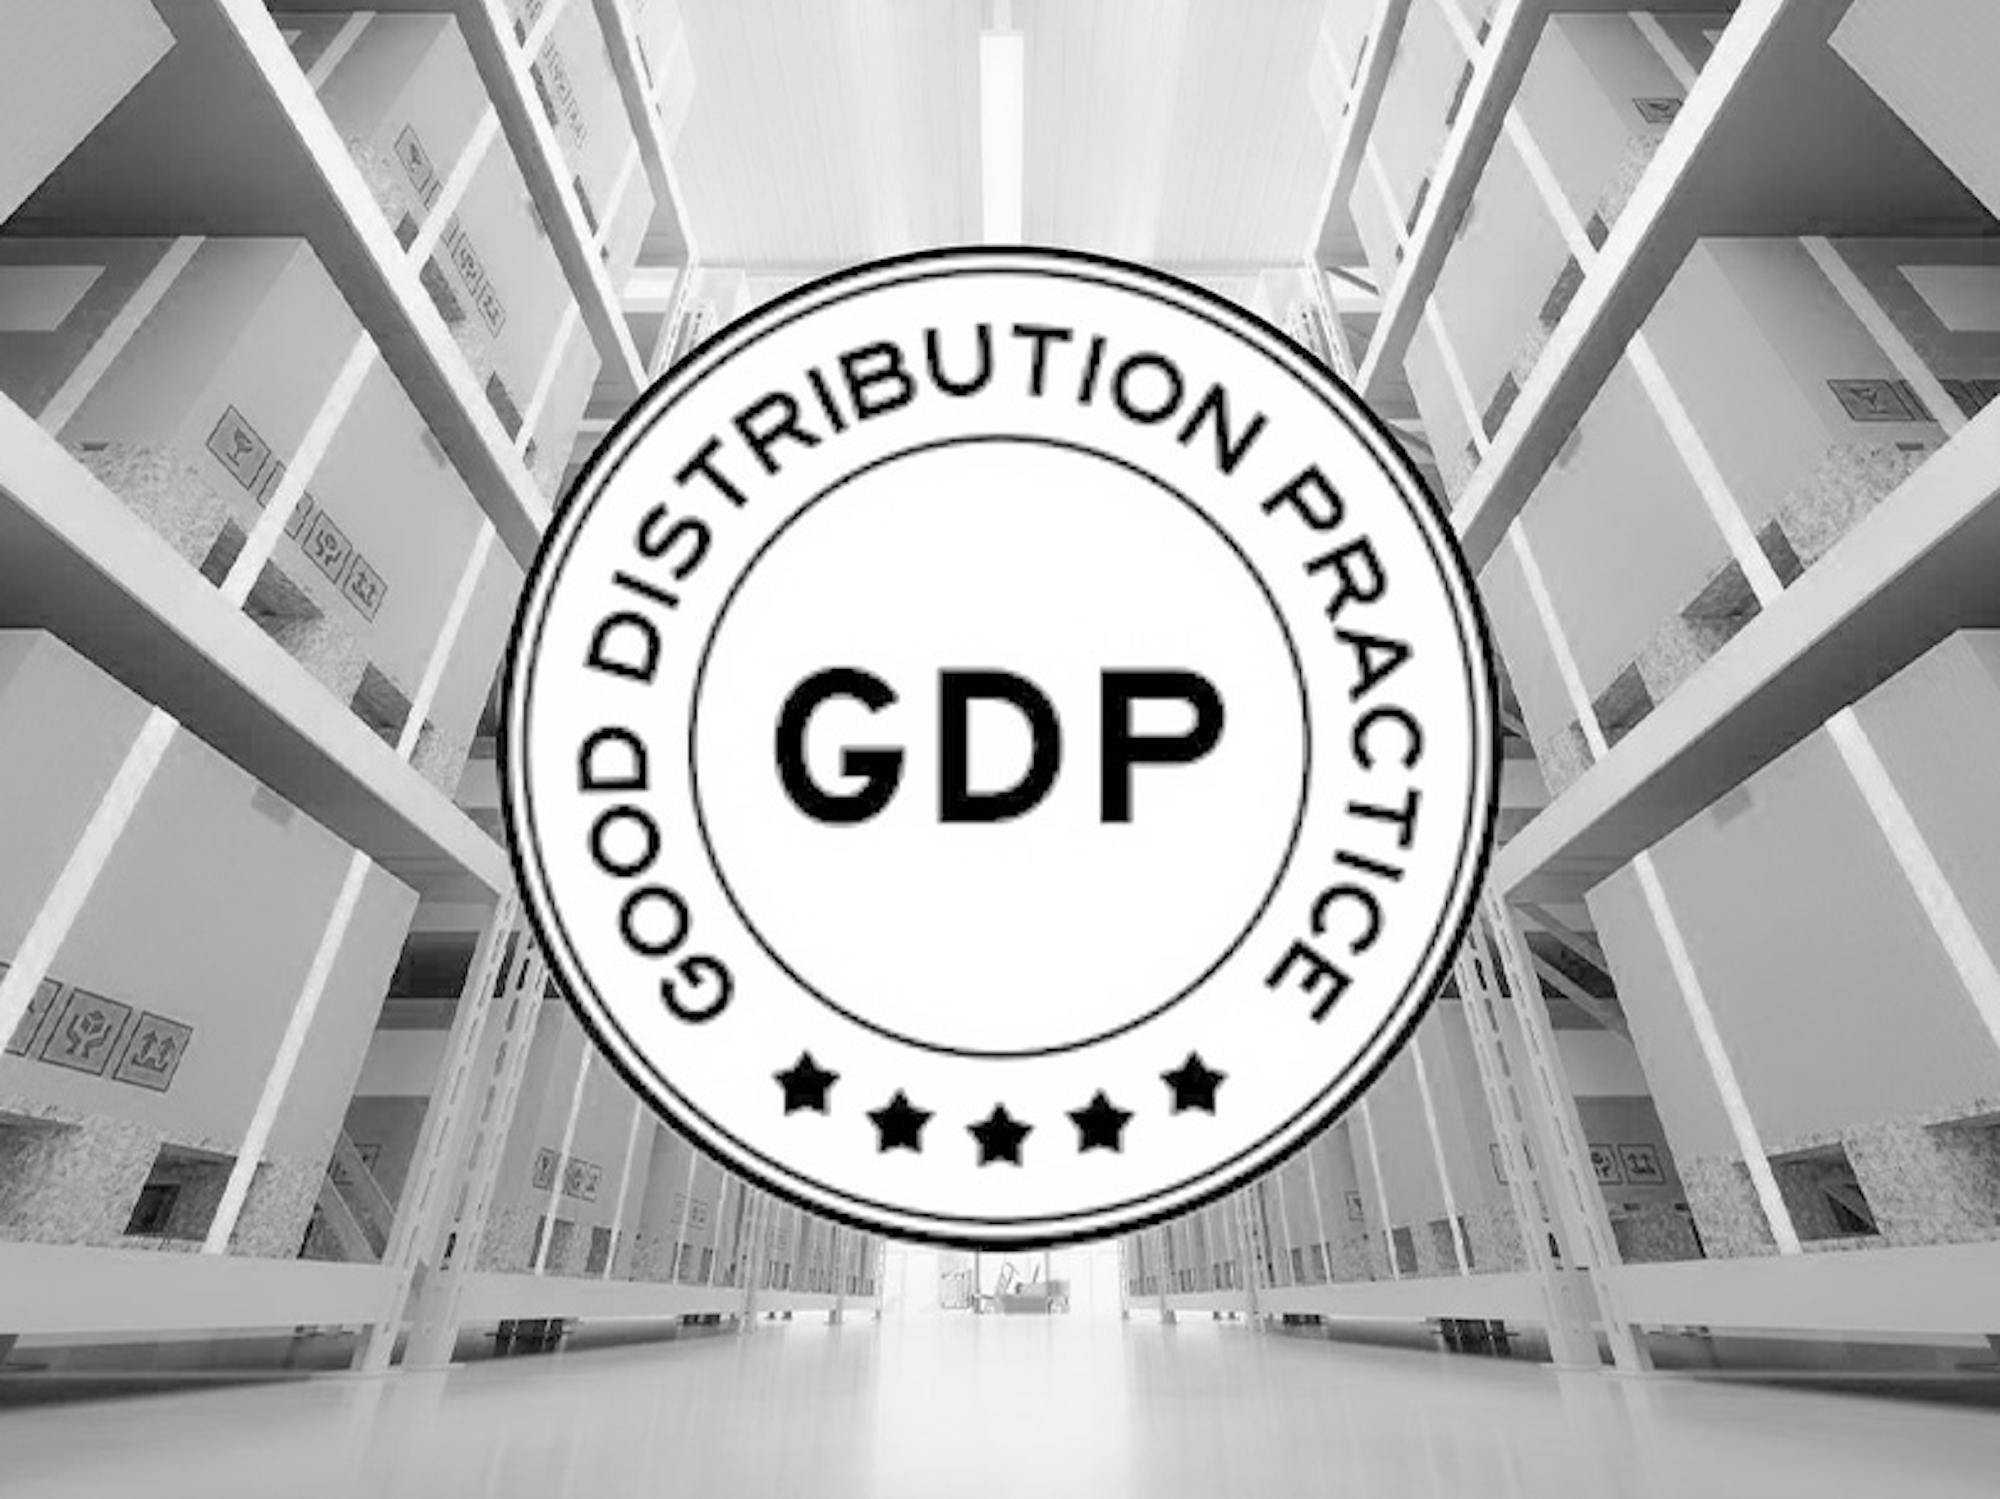 GDP logosu ve depo